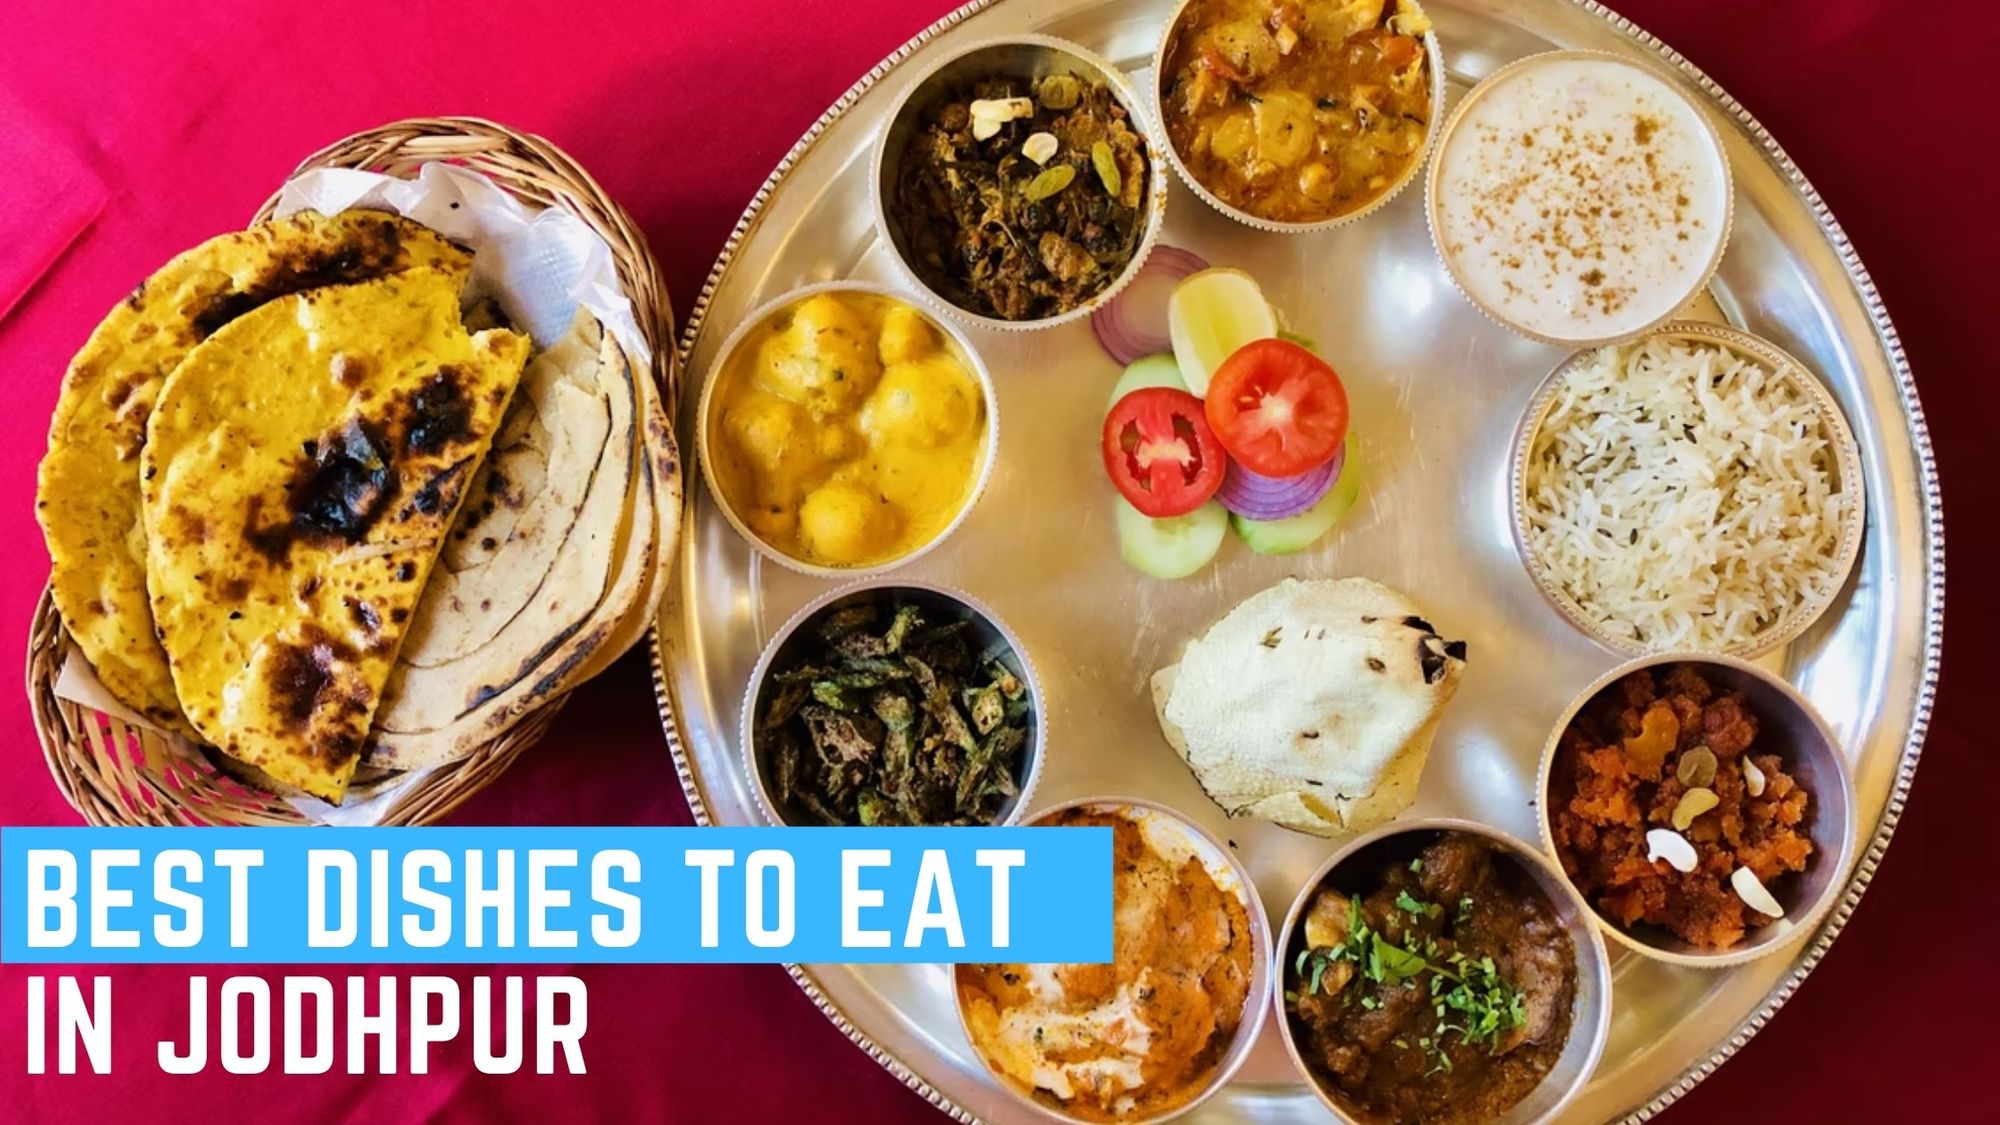 5. Best Restaurants In Jodhpur